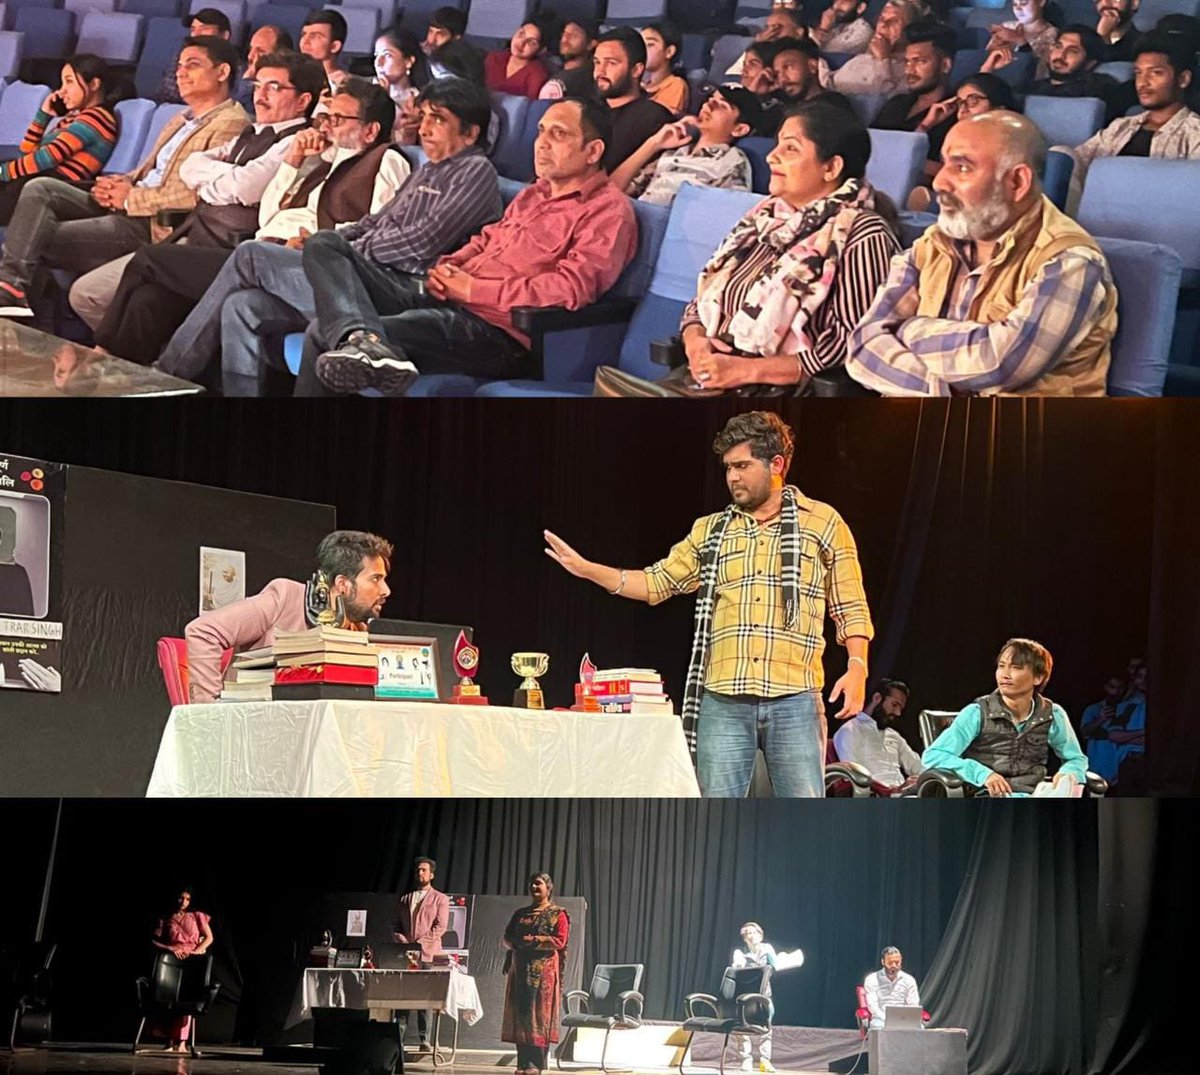 #TheatreFestival
#PlayChittaSingh
 Watched Dogri Comedy play as Chief Guest  staged @AbhinavTheatre Jmu,scintillating performance by  Artist. Spl Thanks 2 AKM Group, Dir Shadab Khan 4 invitation. @MIB_India @MinOfCultureGoI @mirsarwarr @Shakil_kas @nag_saraf @NawazKAS1 @DMReasi